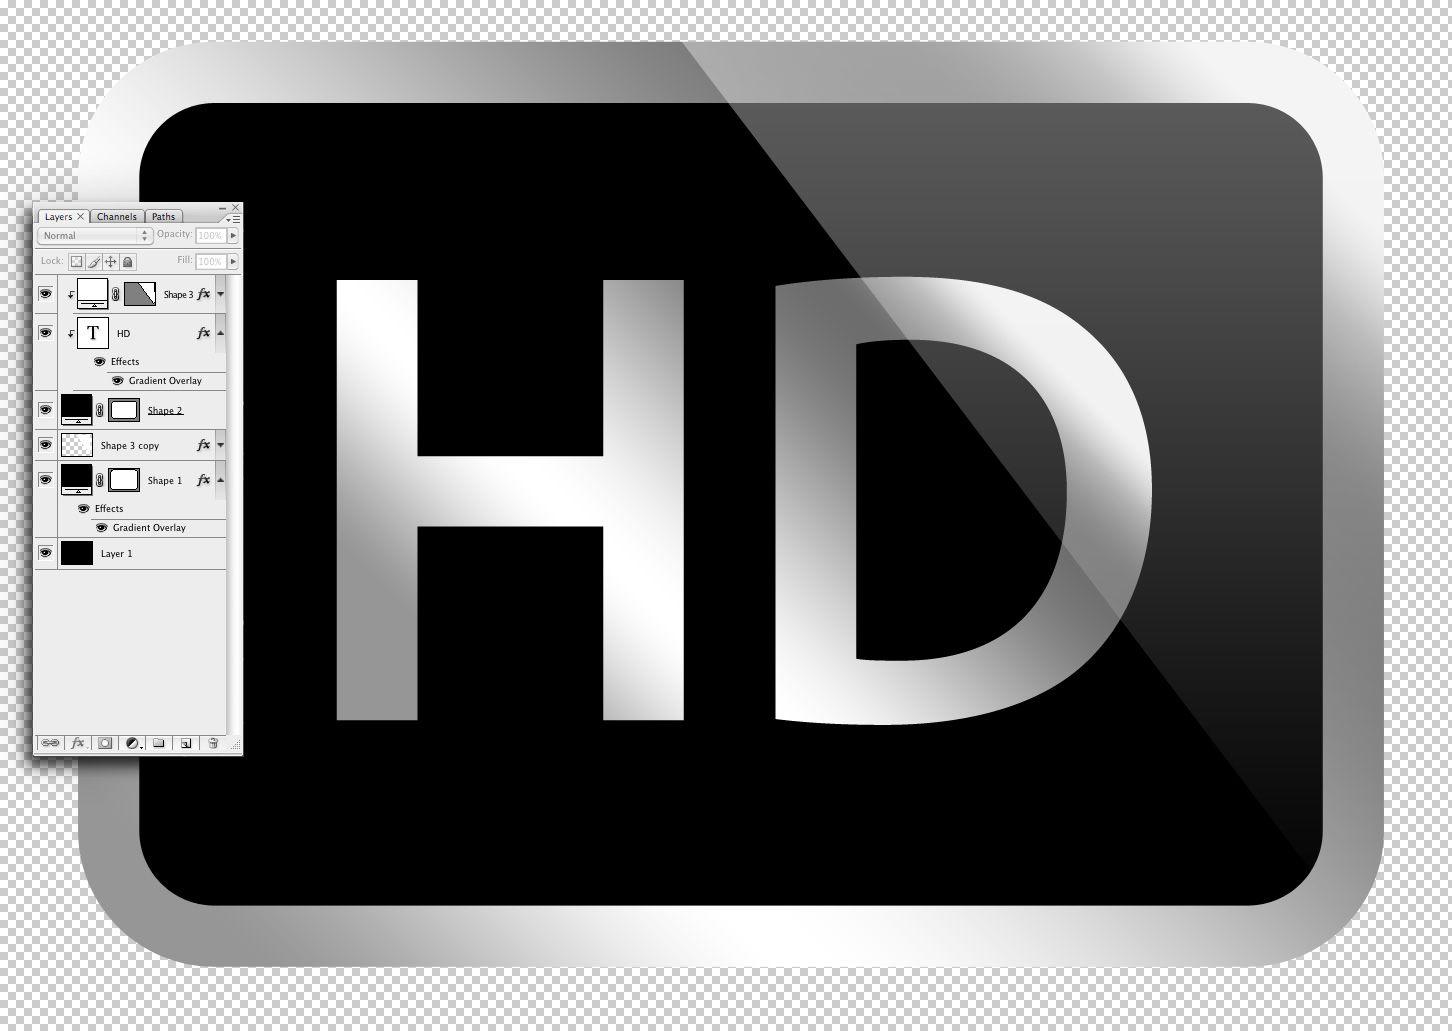 HD Logo - HD Logo by jasonh1234 on DeviantArt